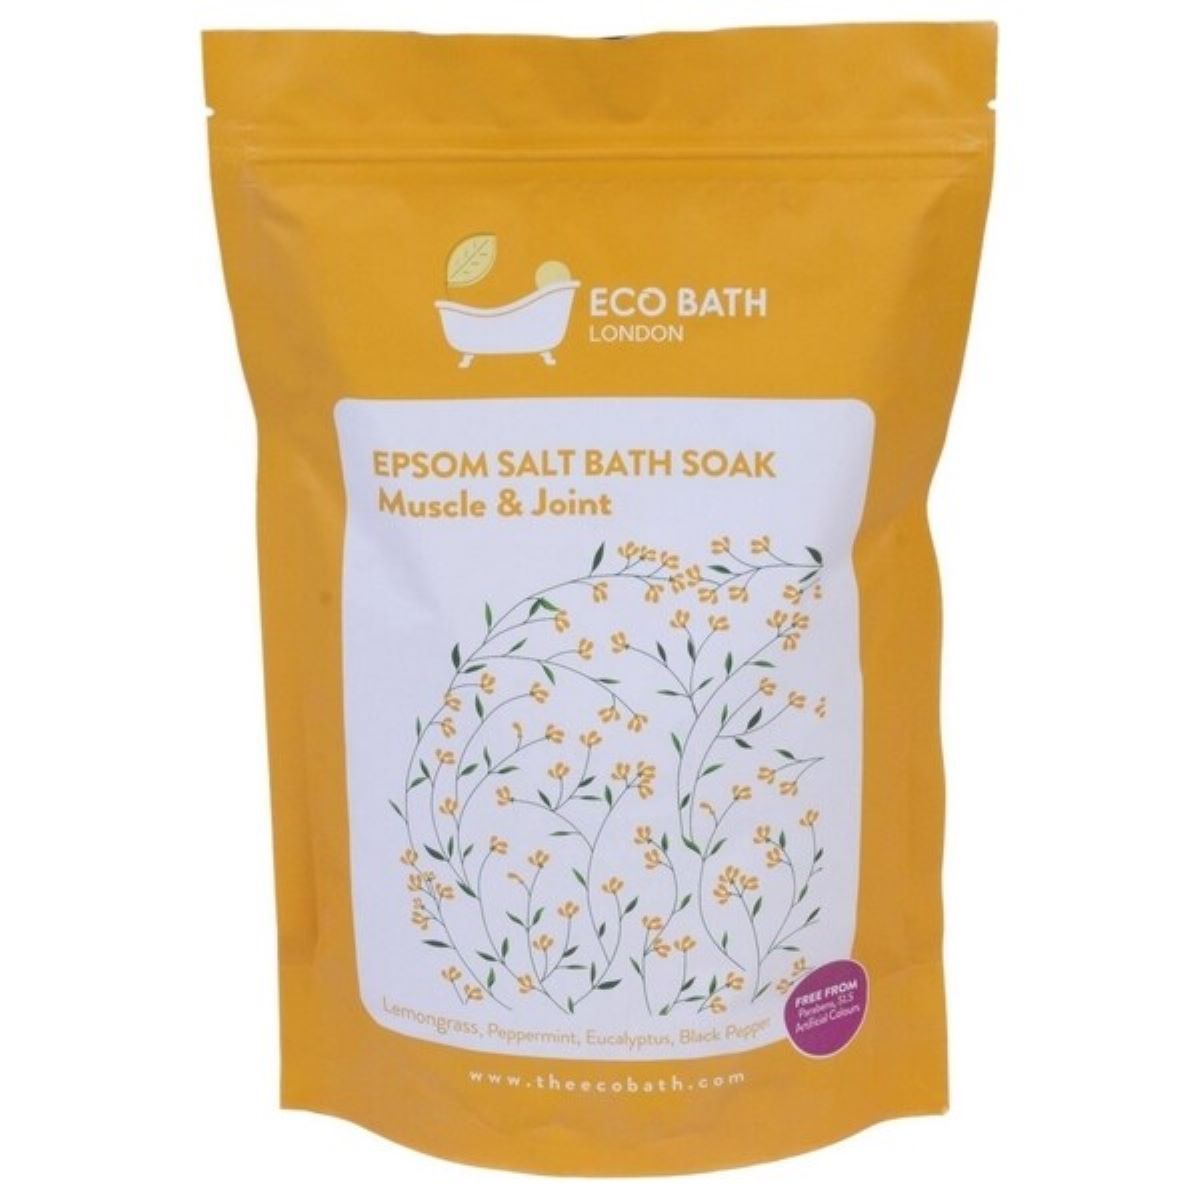 Eco Bath Epsom Salt Bath Soak Muscle & Joint 1000 Grams Brand: Eco Bath